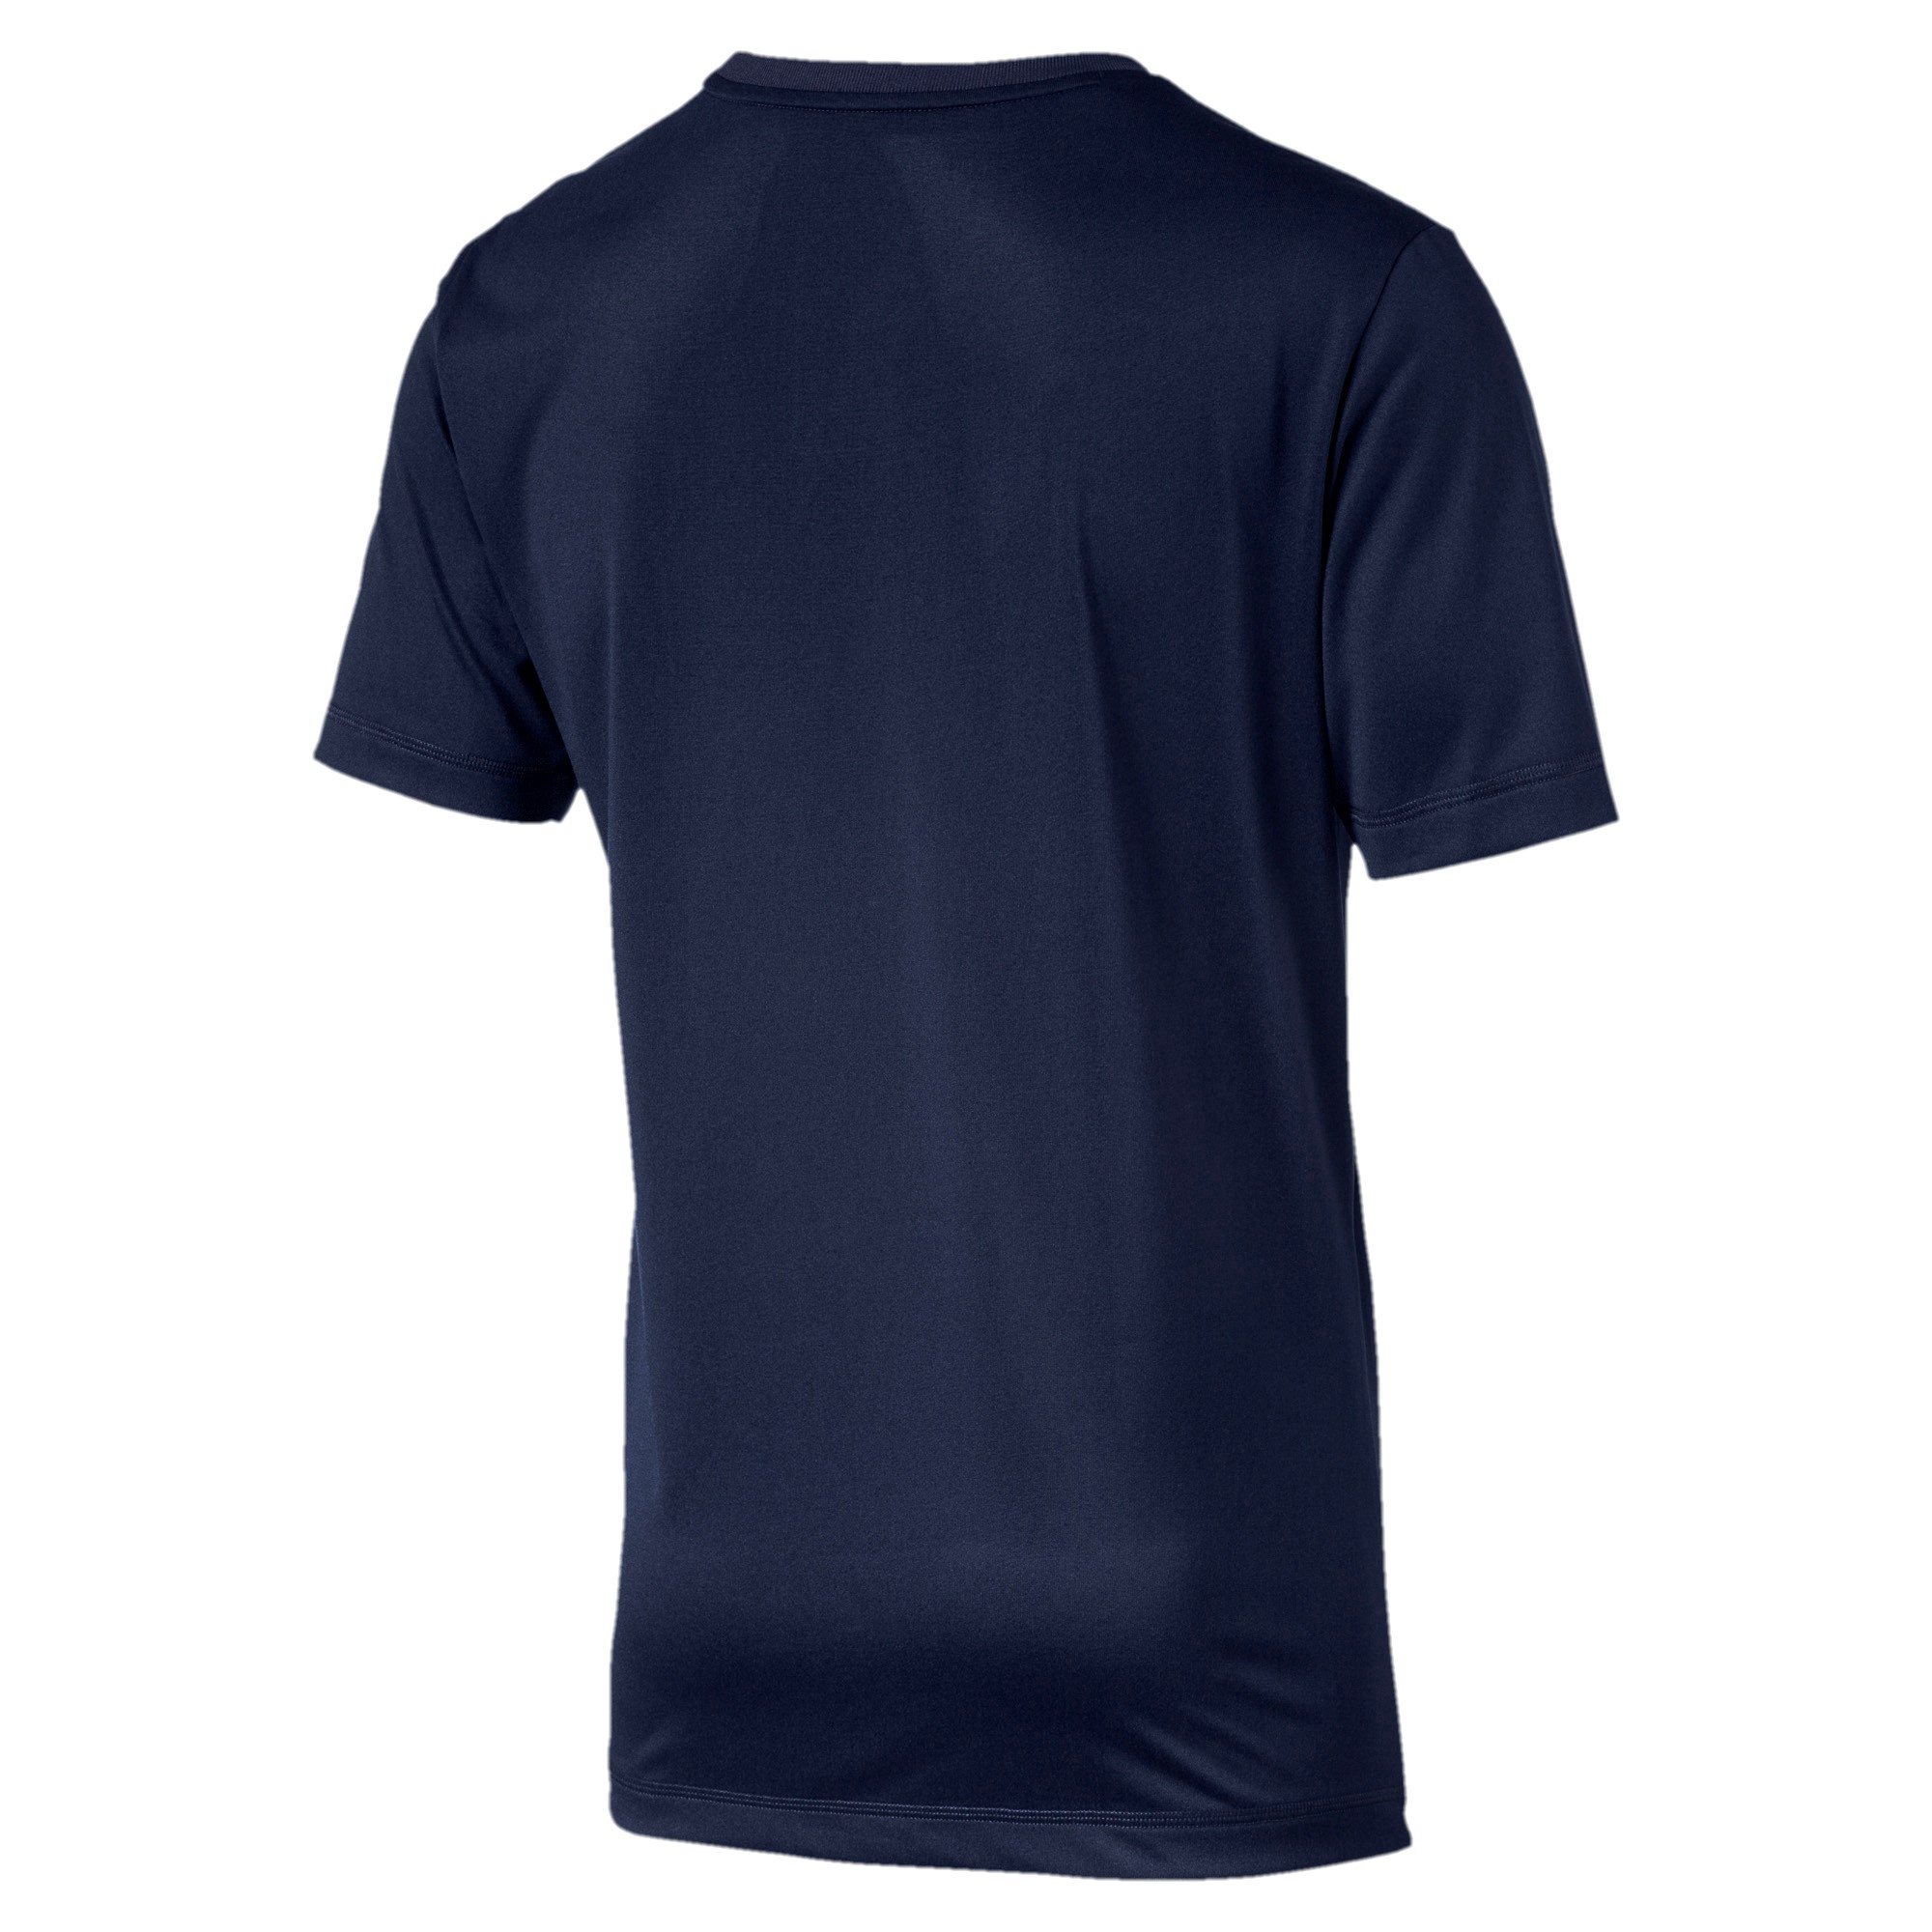 PUMA Herren Active Tee T-Shirt DryCELL Men 851702 06 blau 